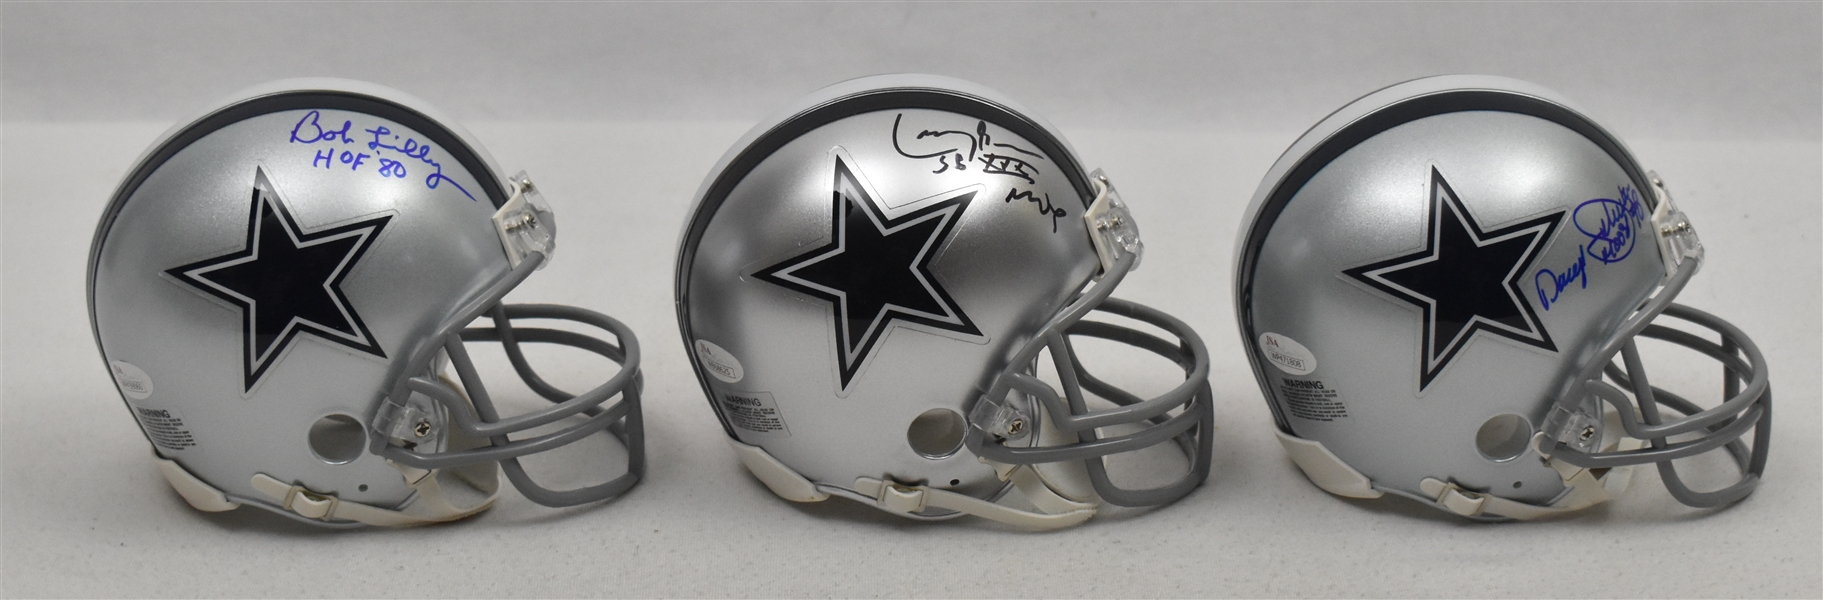 Dallas Cowboys Lot of 3 Autographed Mini Helmets w/Bob Lily